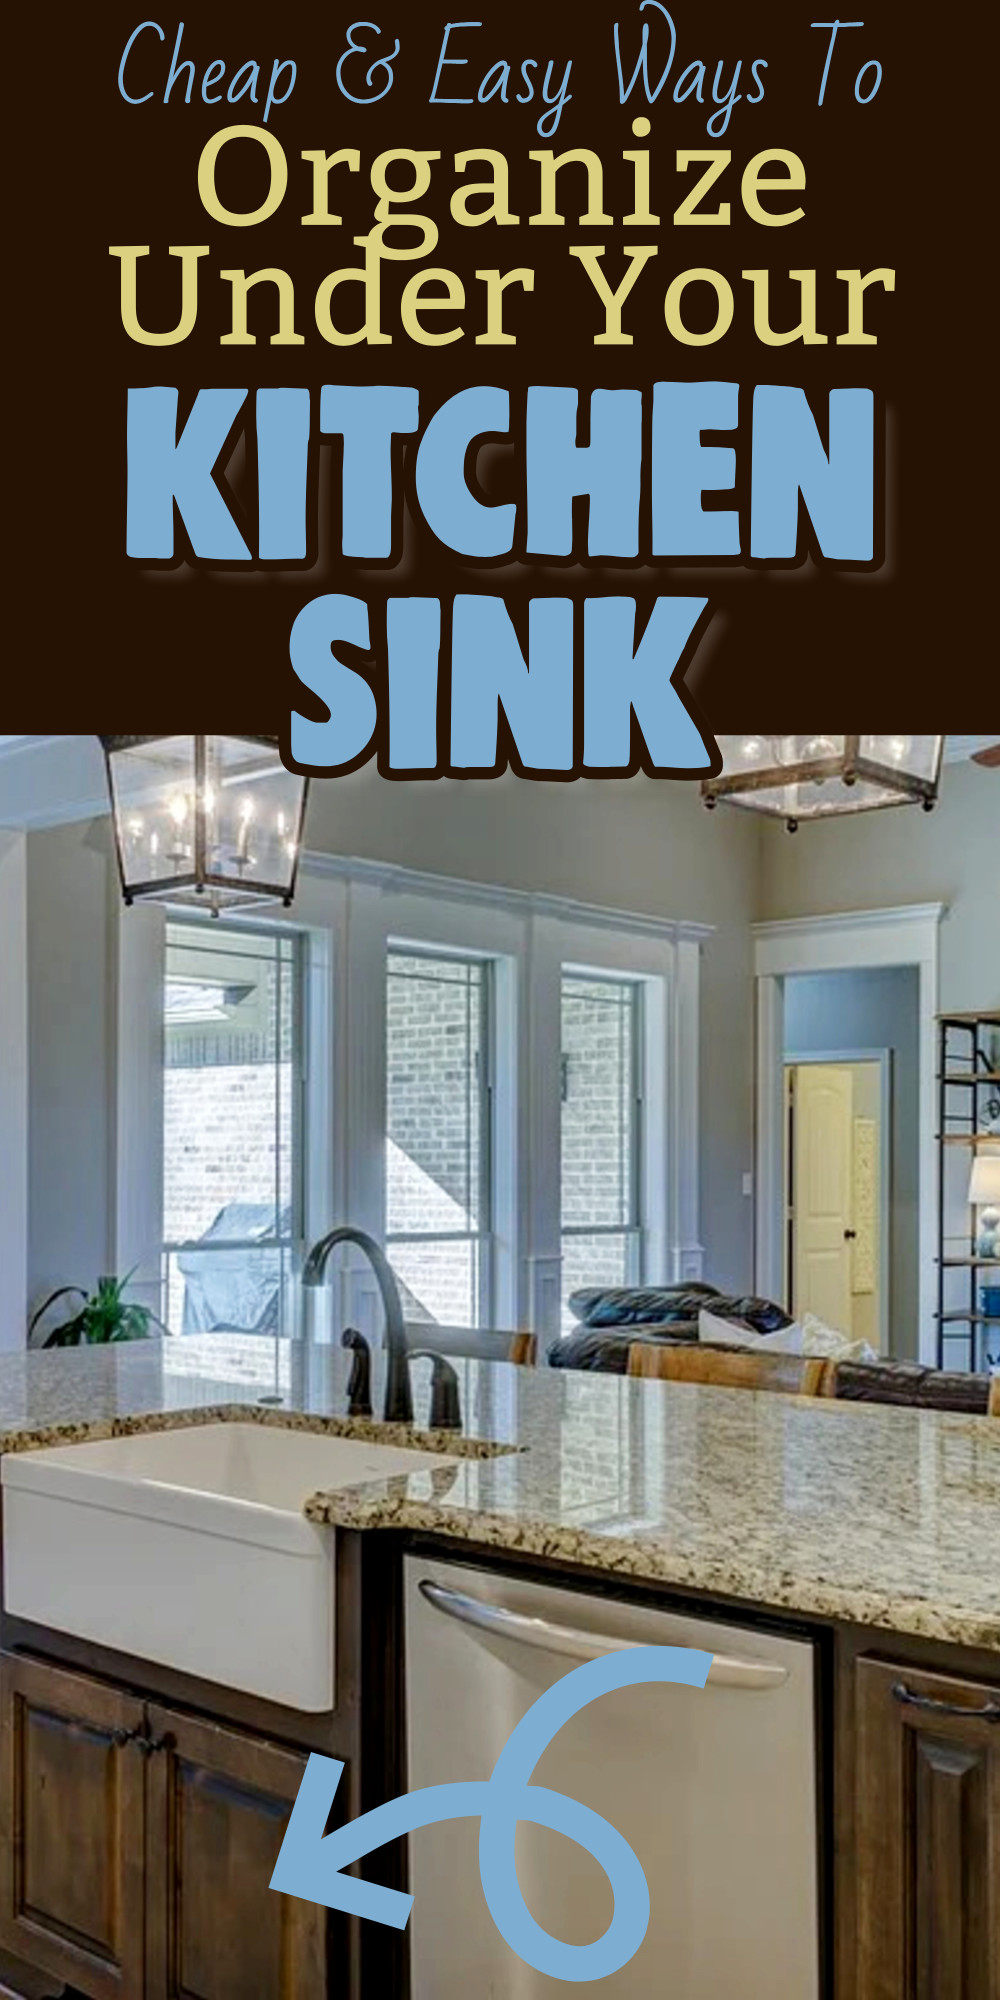 Under Kitchen Sink Storage Ideas - Cabinet Organization Tips For an Uncluttered Kitchen On a Budget